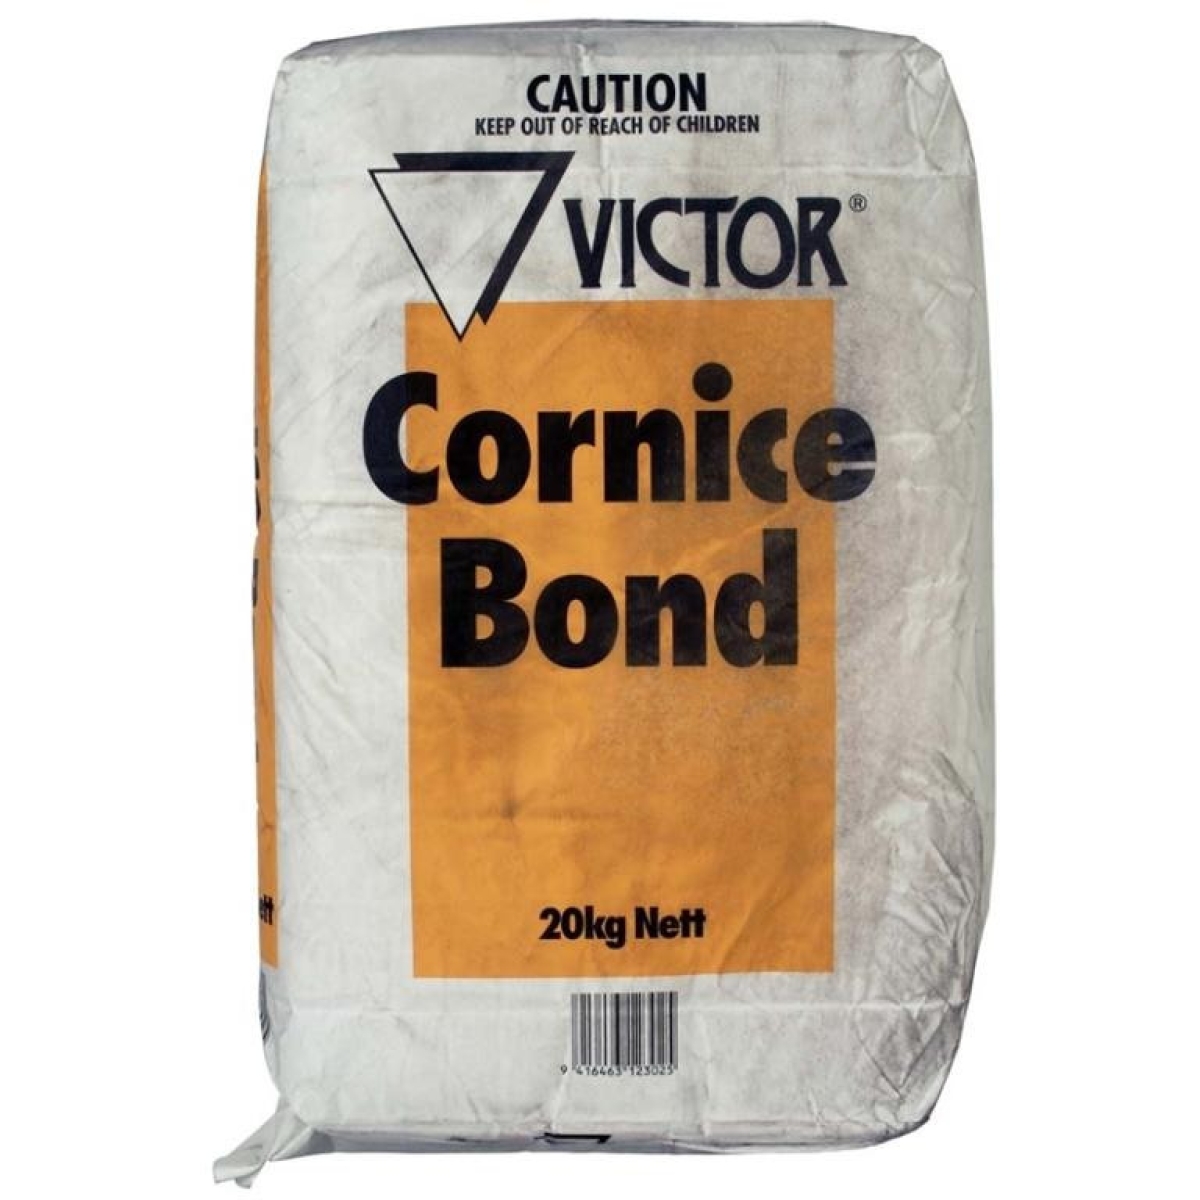 Victor Cornice Bond 20Kg